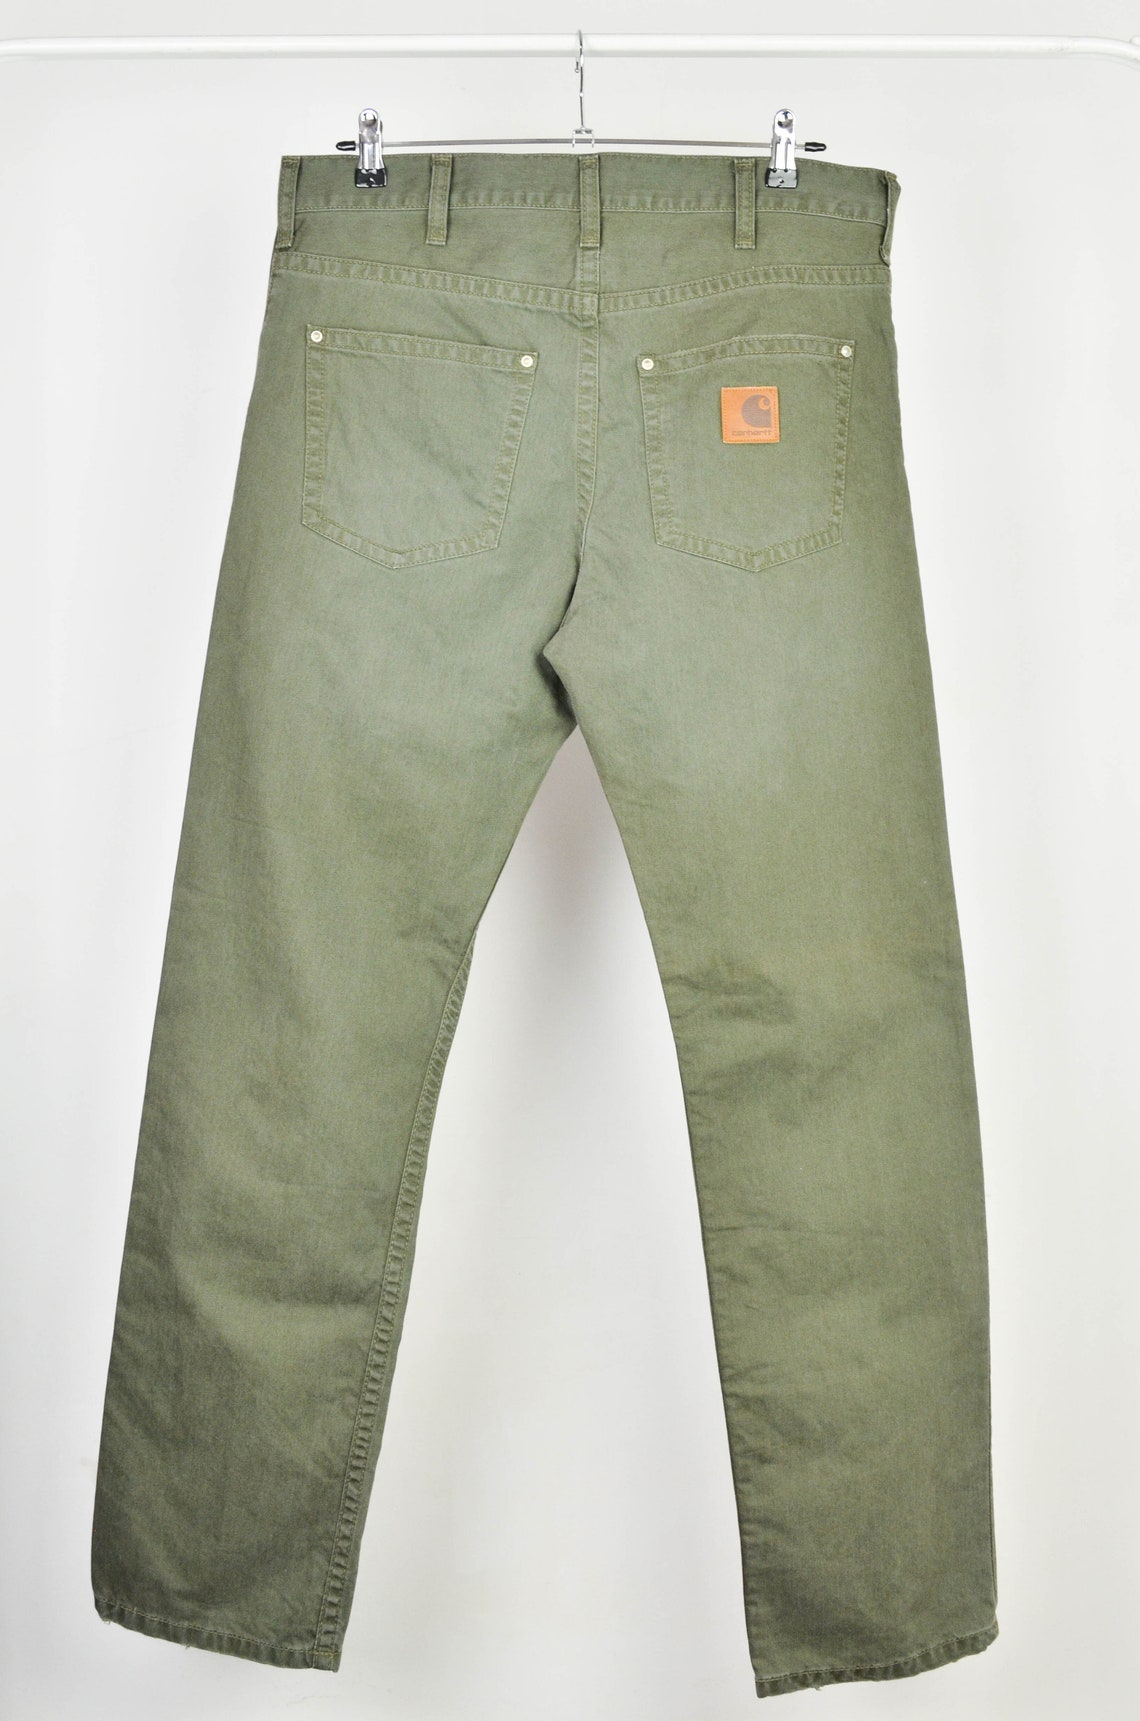 Men's Carhartt Green Slim Pants Size 32 | Etsy